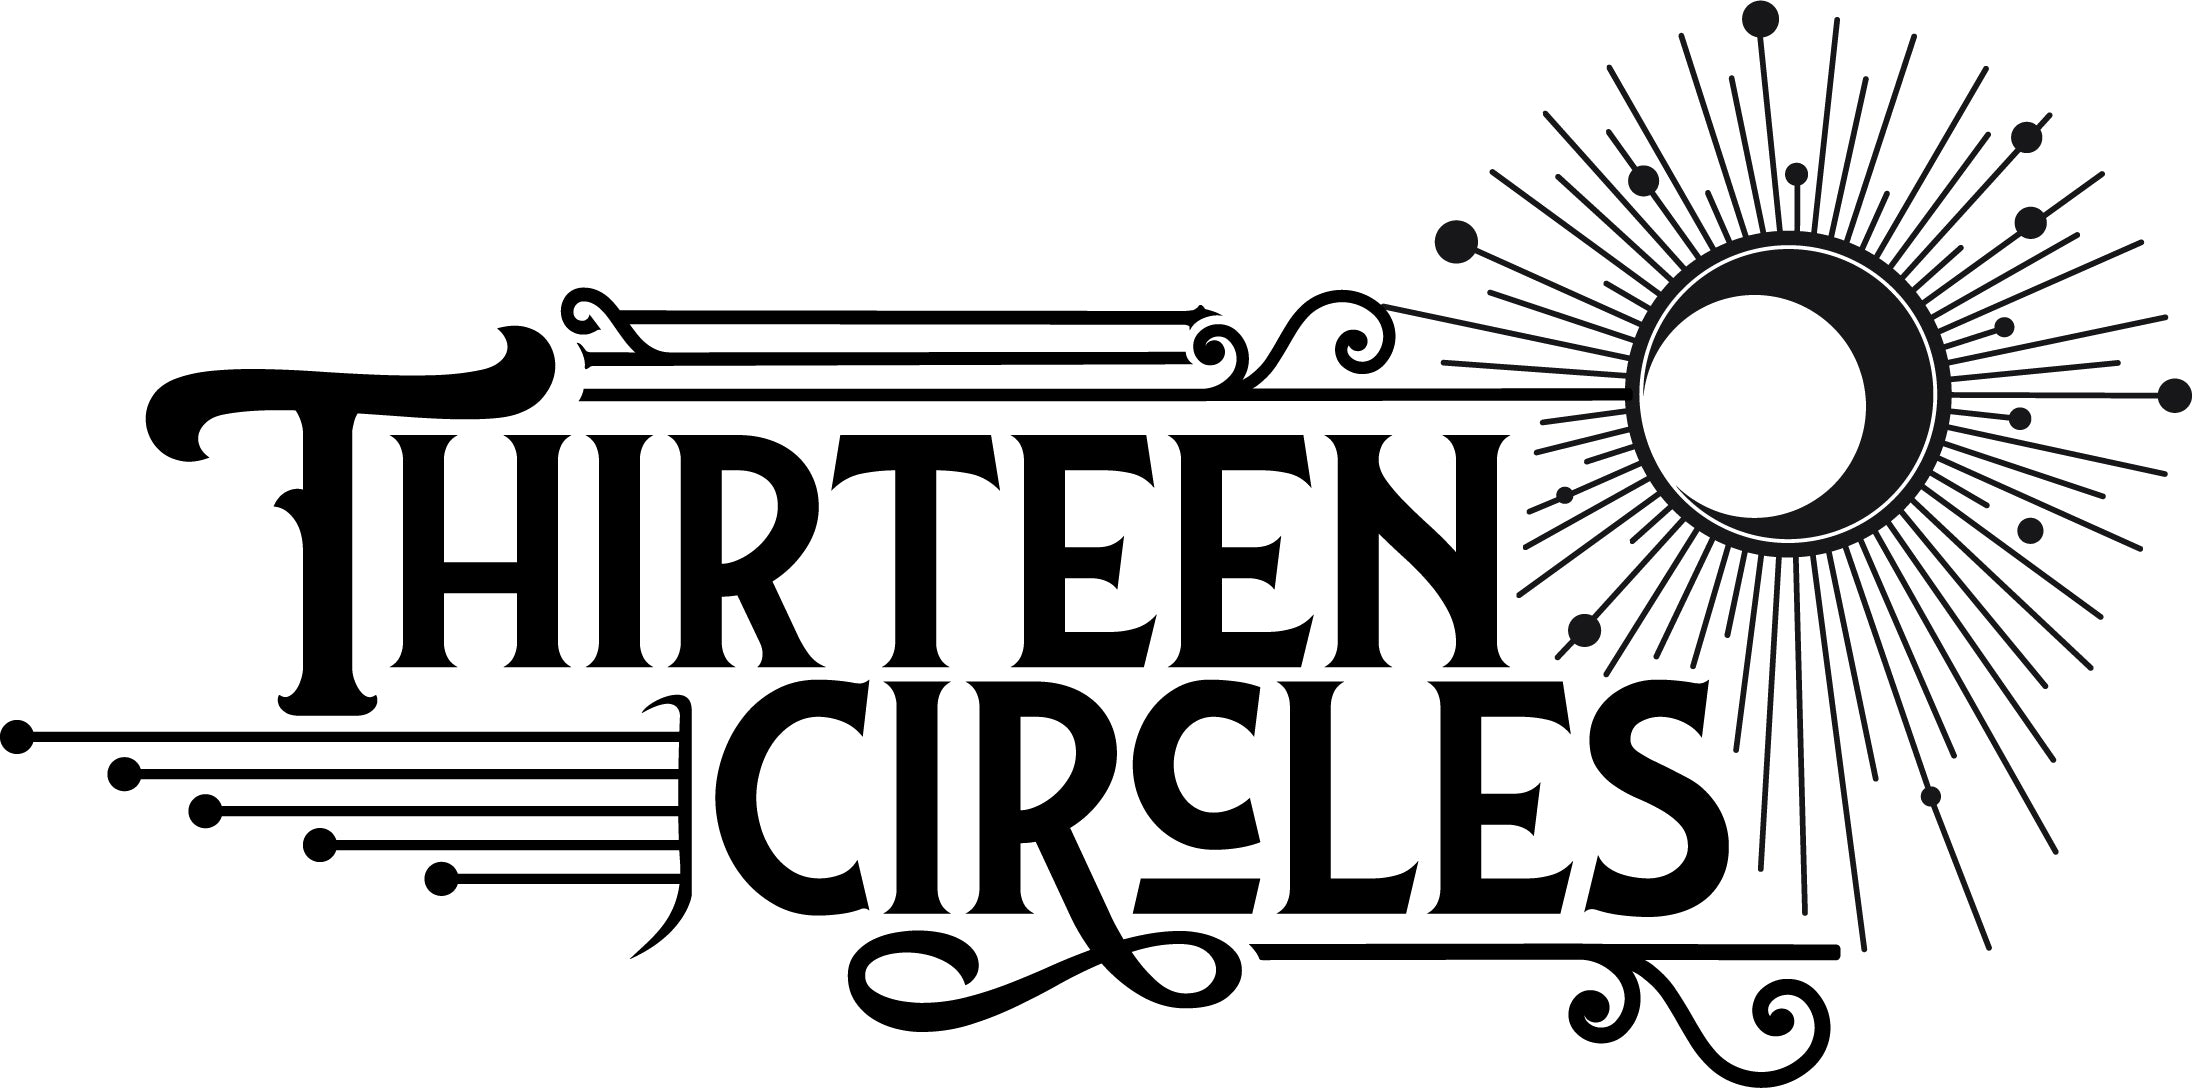 Thirteen Circles